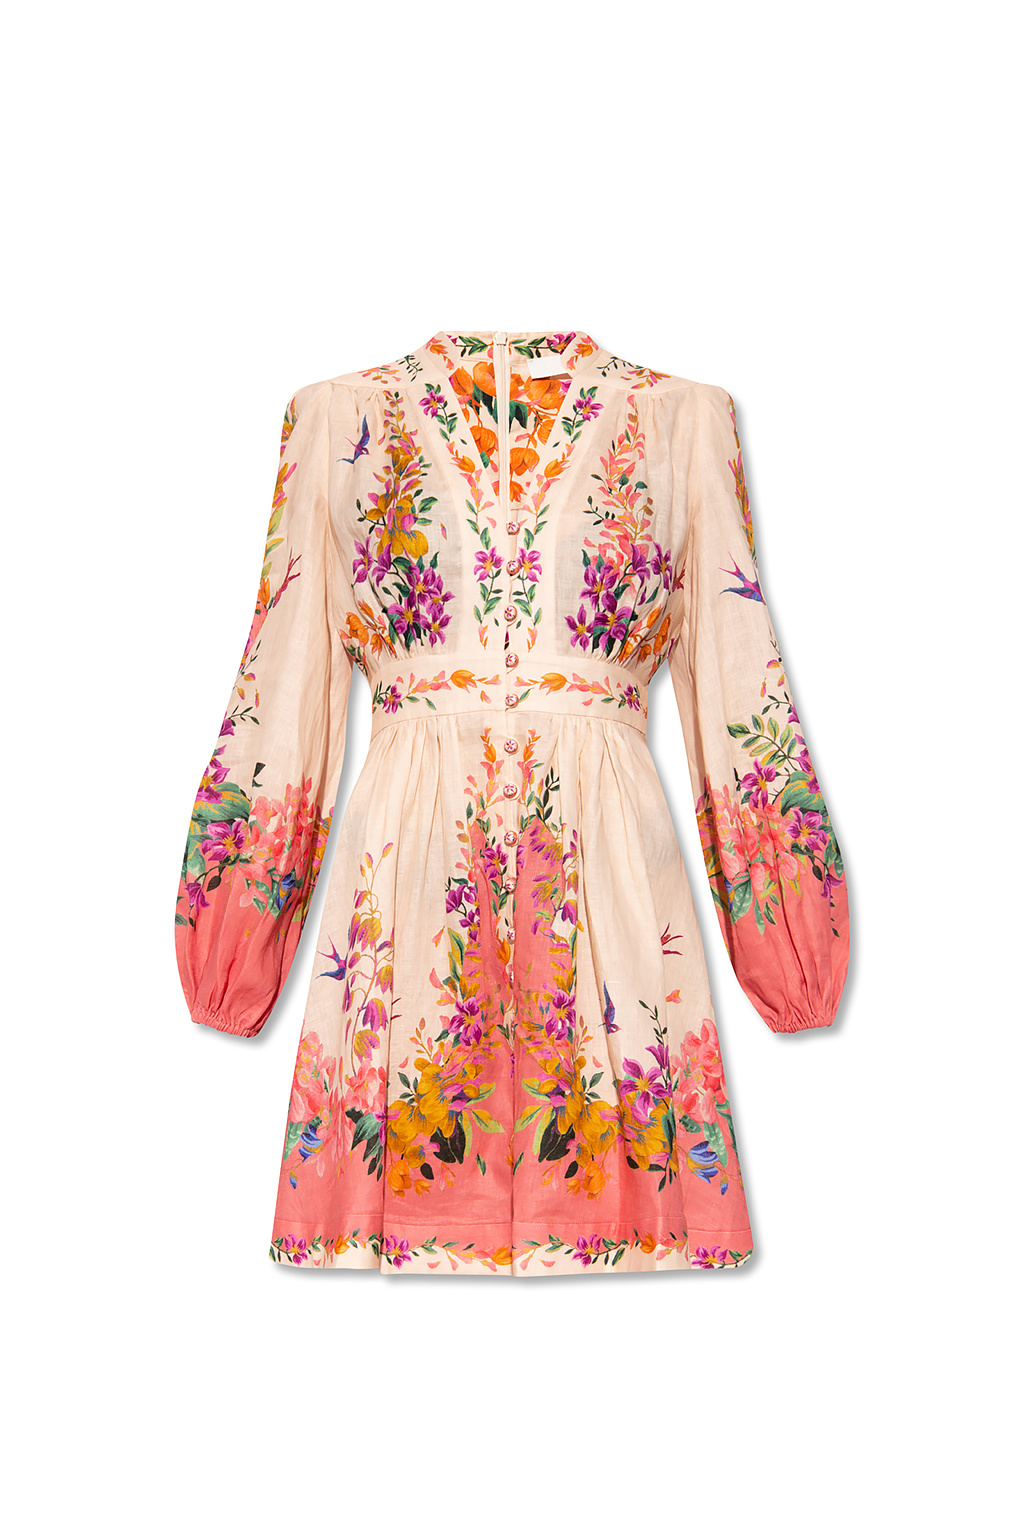 Zimmermann Floral-printed dress